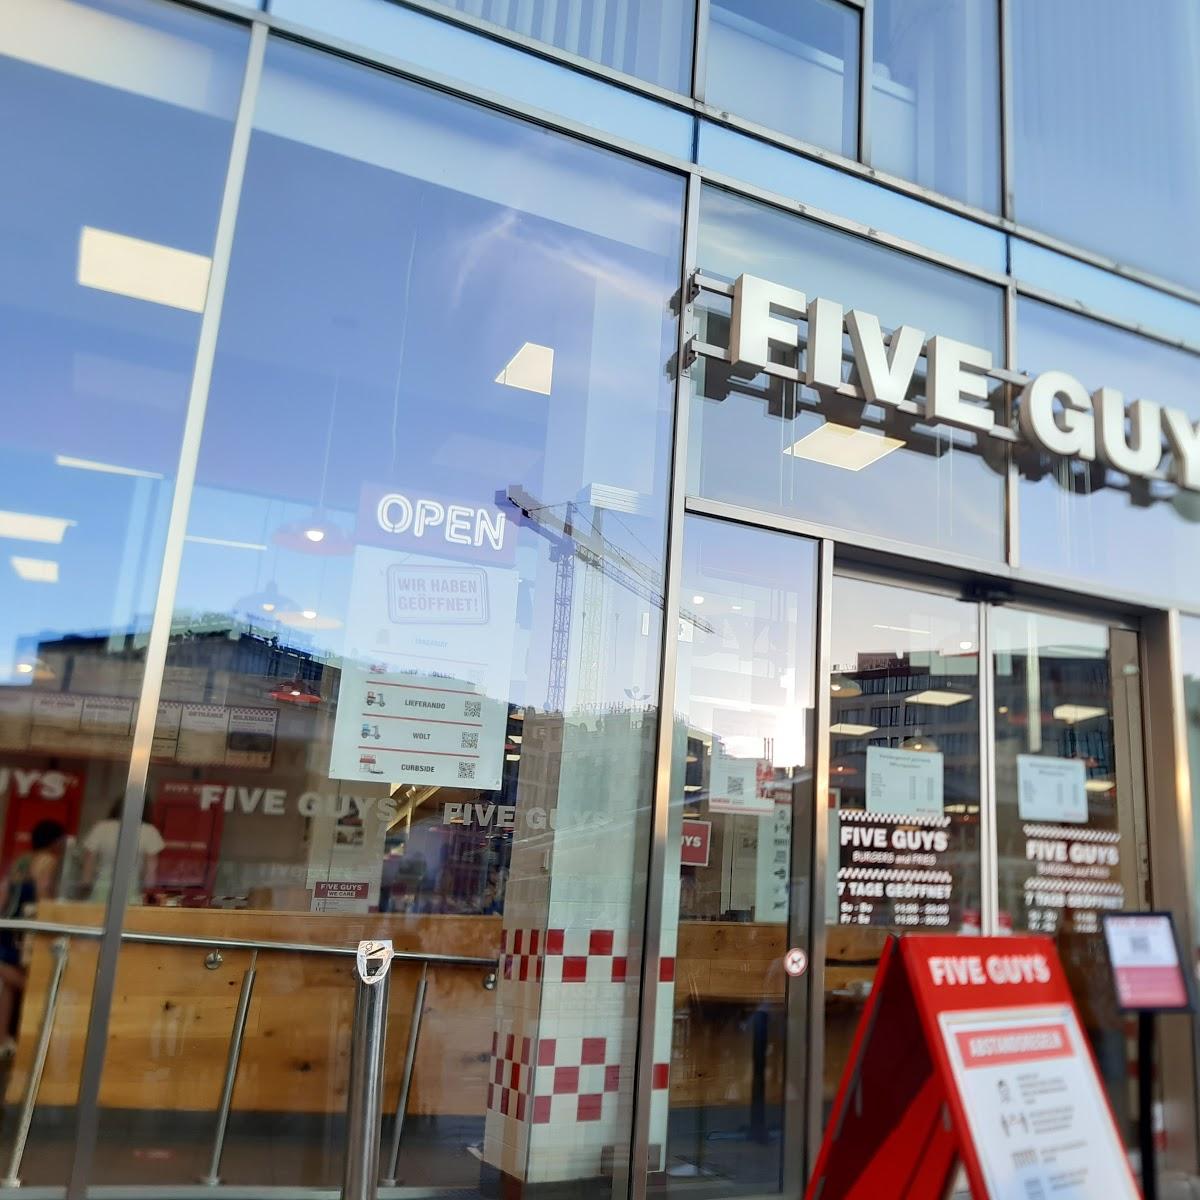 Restaurant "Five Guys" in Frankfurt am Main